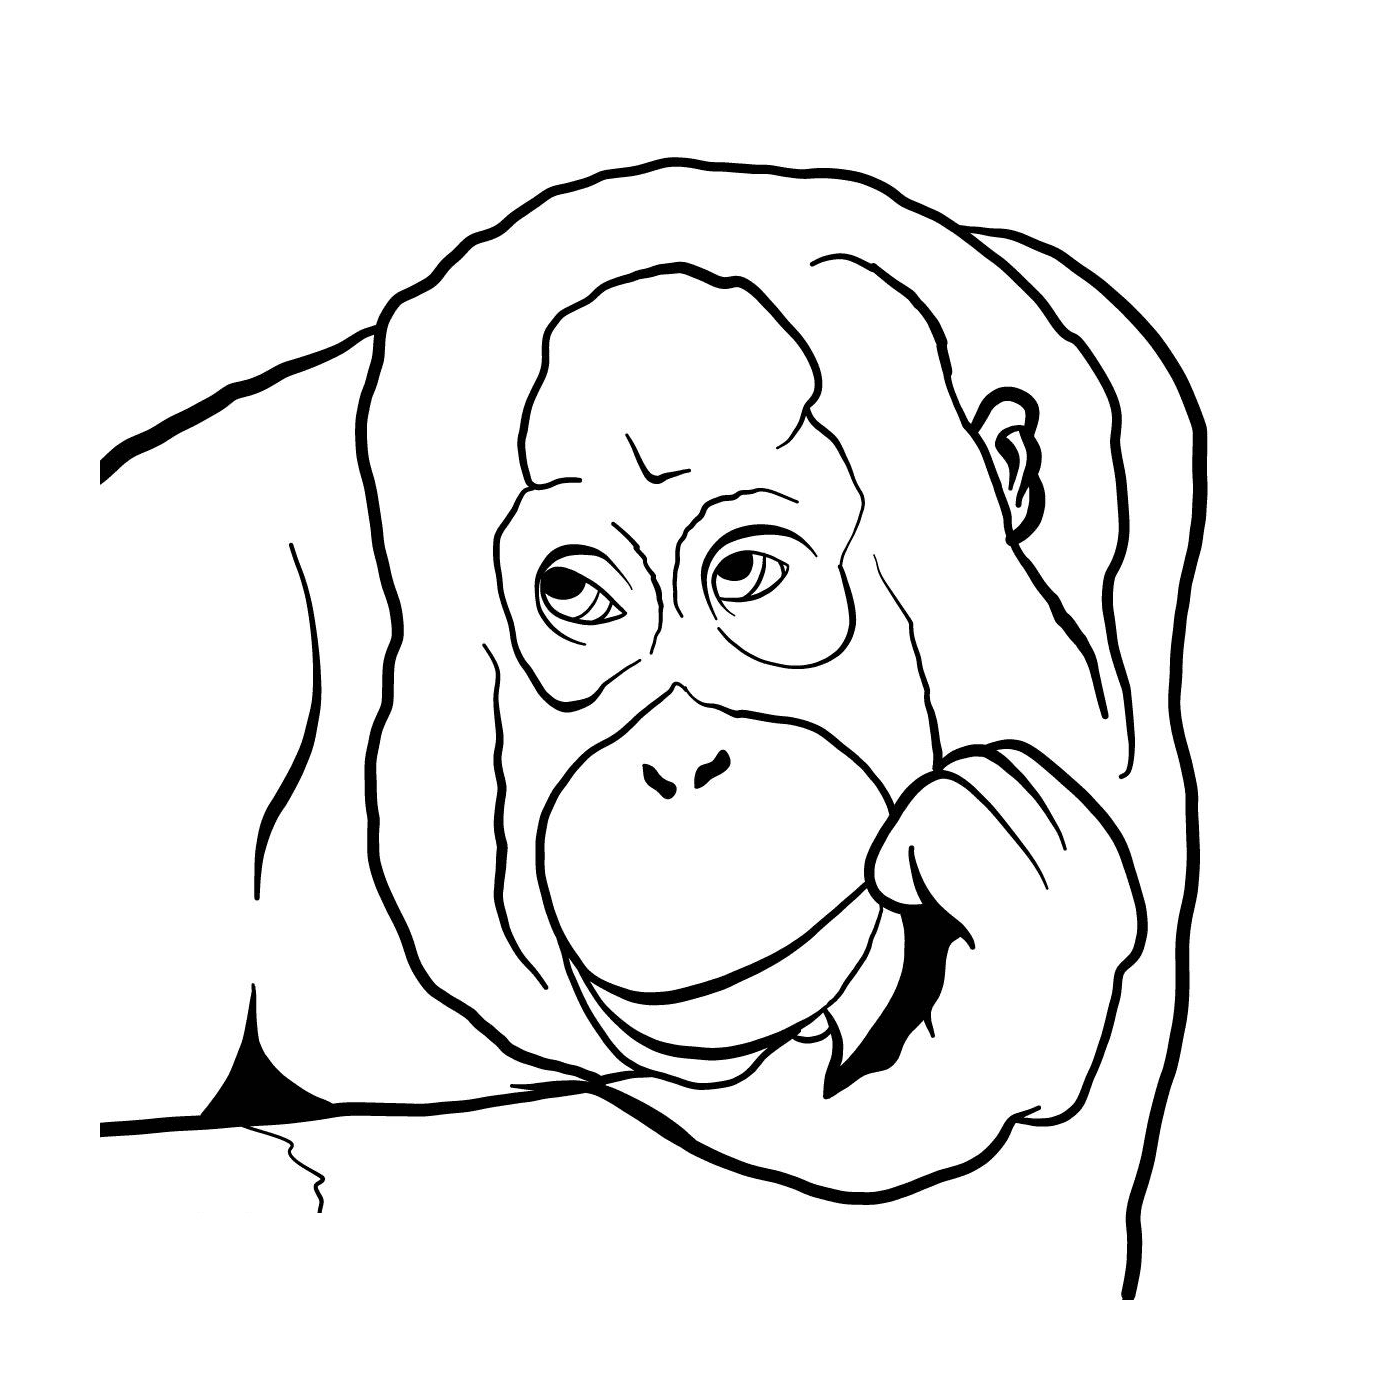  un gorila 